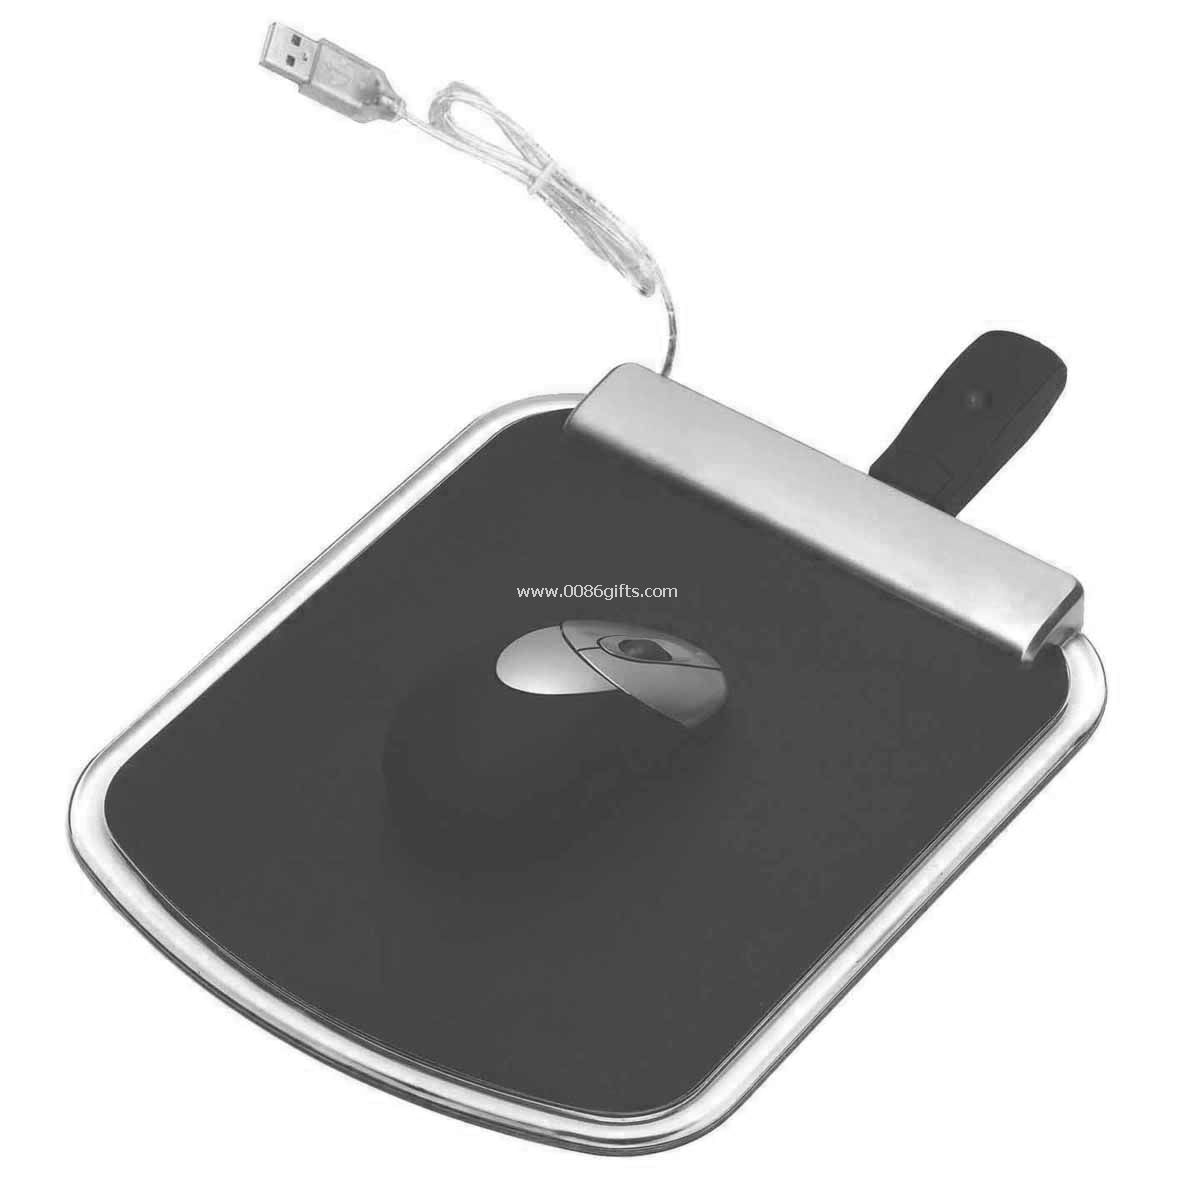 USB Hub Mouse Pad